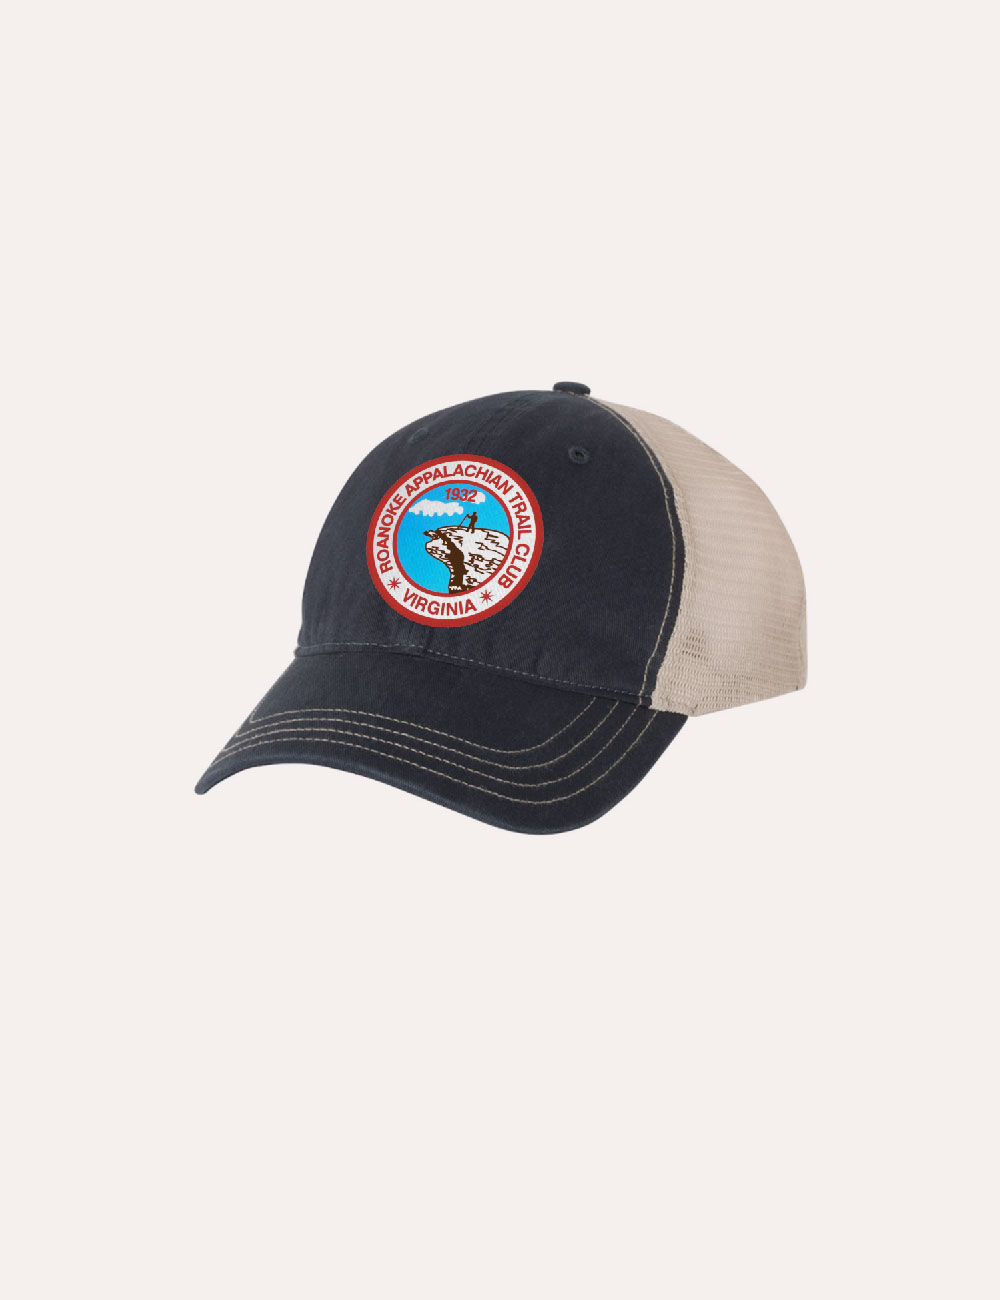 Roanoke Appalachian Trail Club - Merch - Soft Mesh Navy & Khaki Trucker Hat